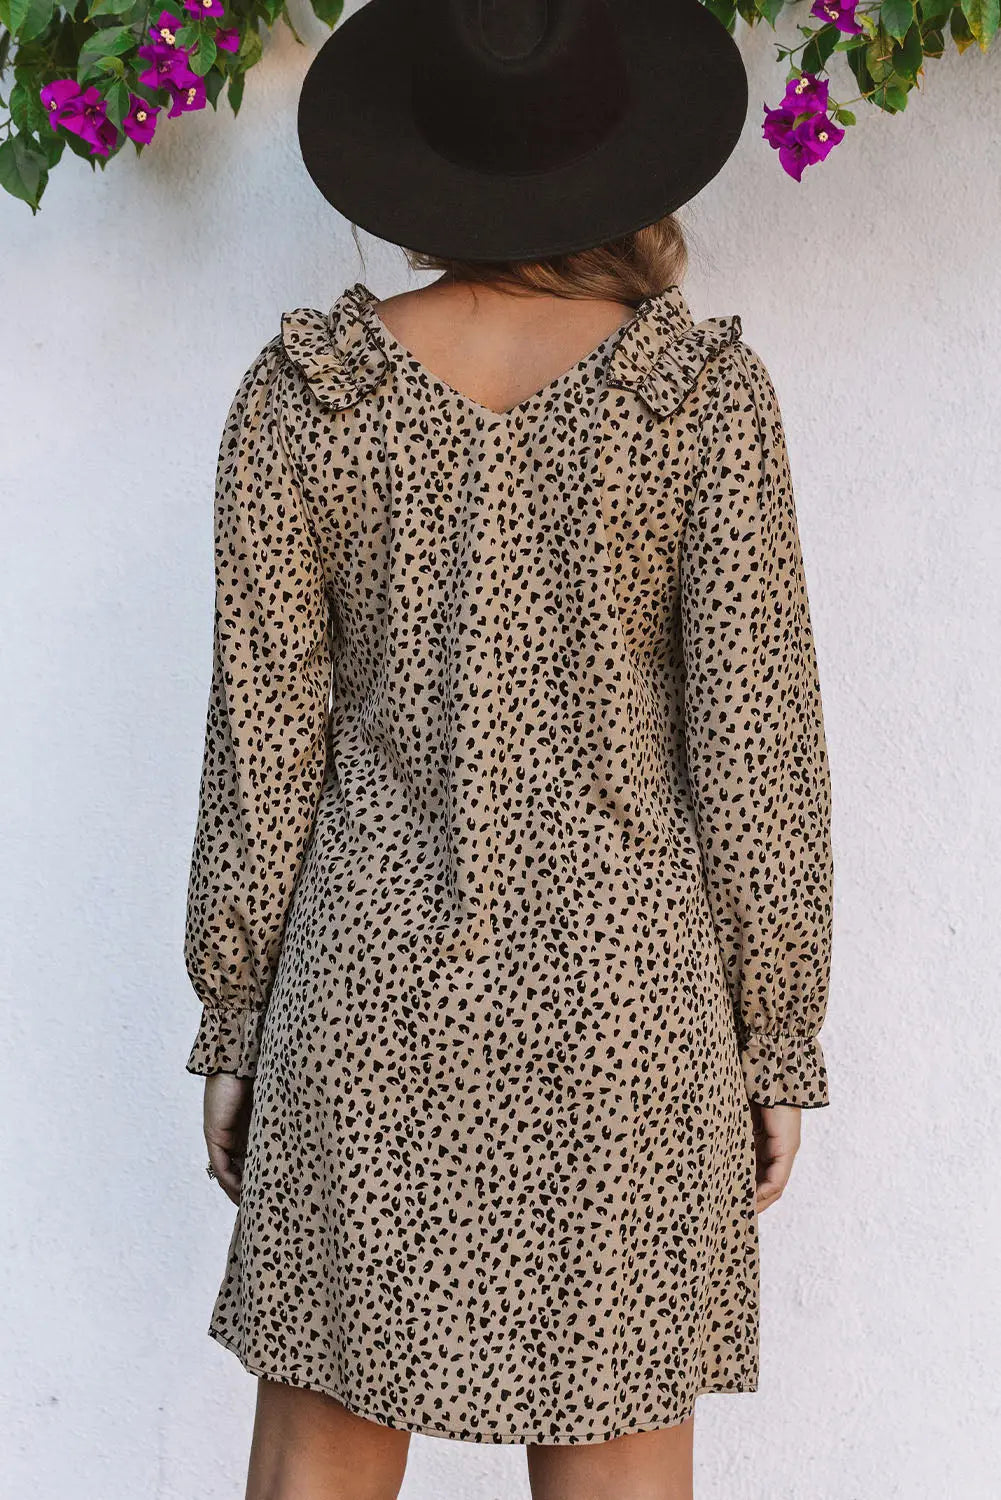 Khaki Leopard Frill Trim V Neck Dress-1